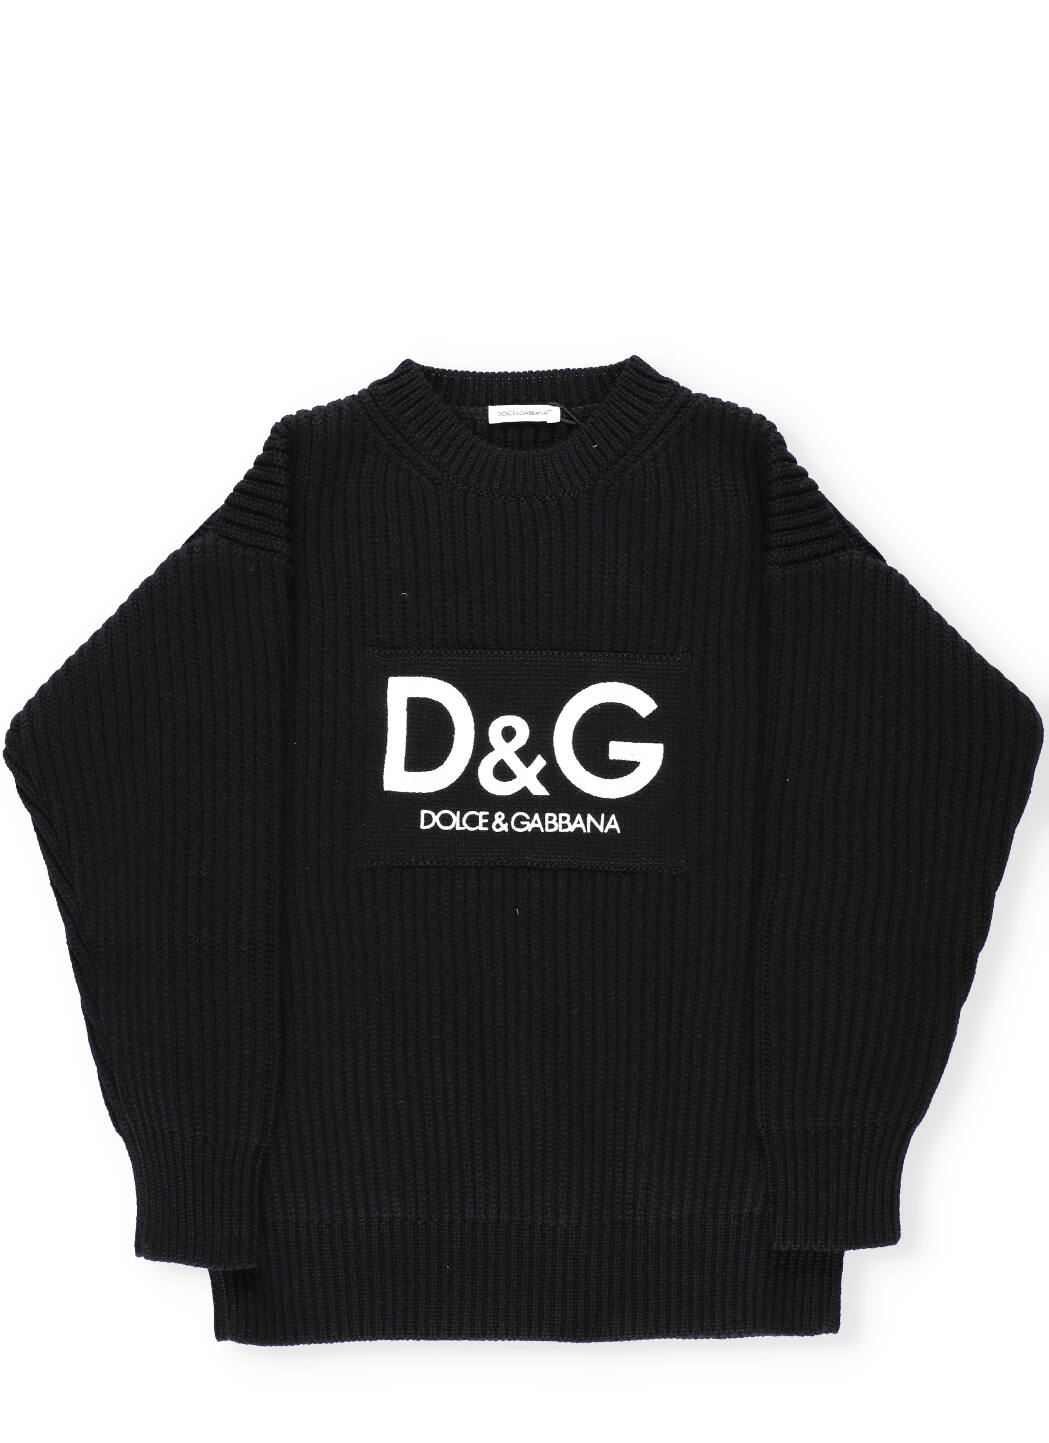 Dolce & Gabbana Dg Next Sweater